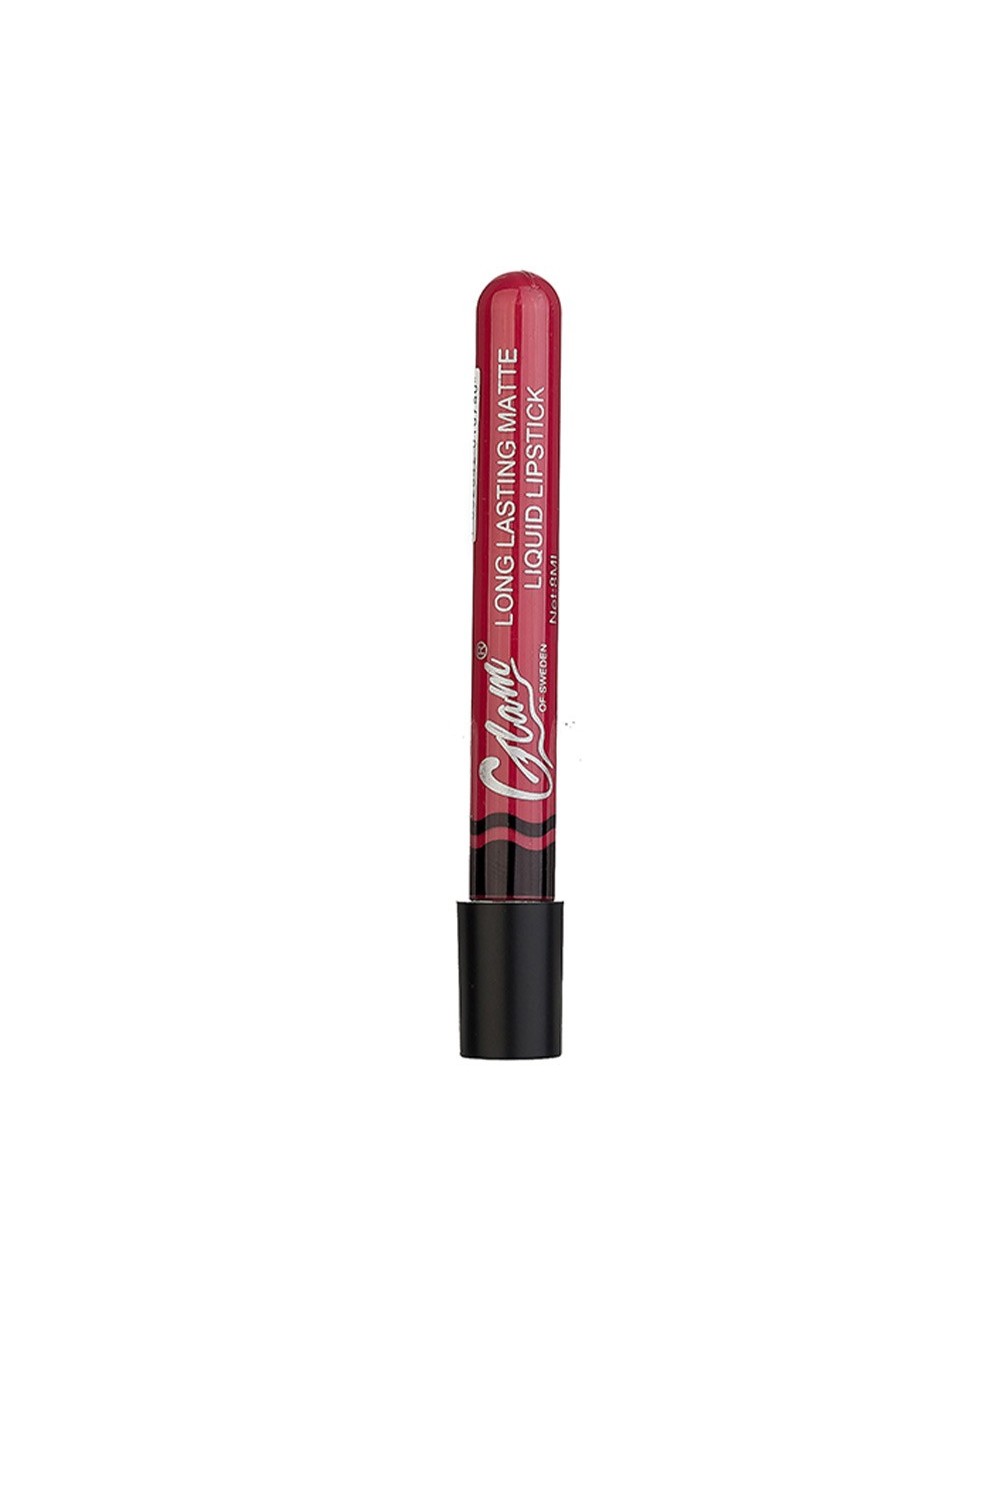 Glam Of Sweden Matte Liquid Lipstick 09-Admirable 8ml